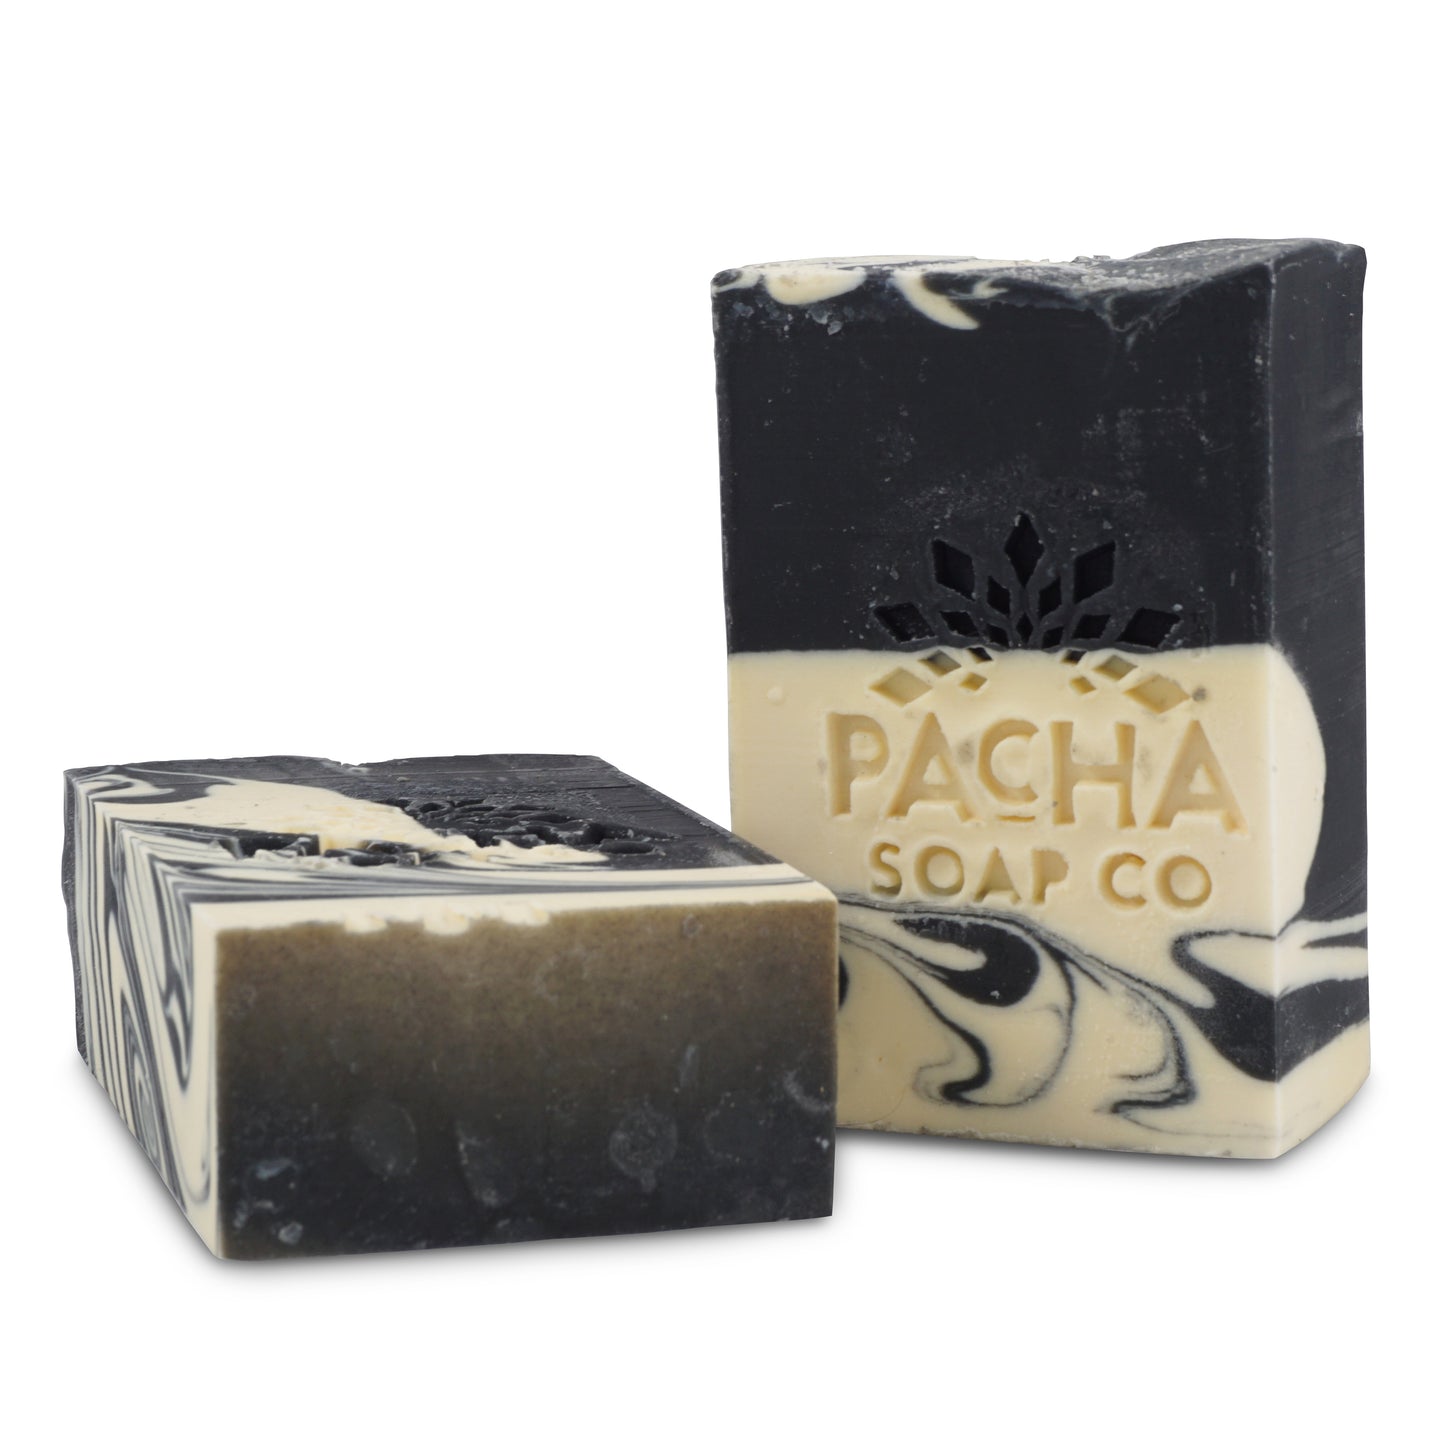 Pacha's Clarifying Charcoal Bar Soap